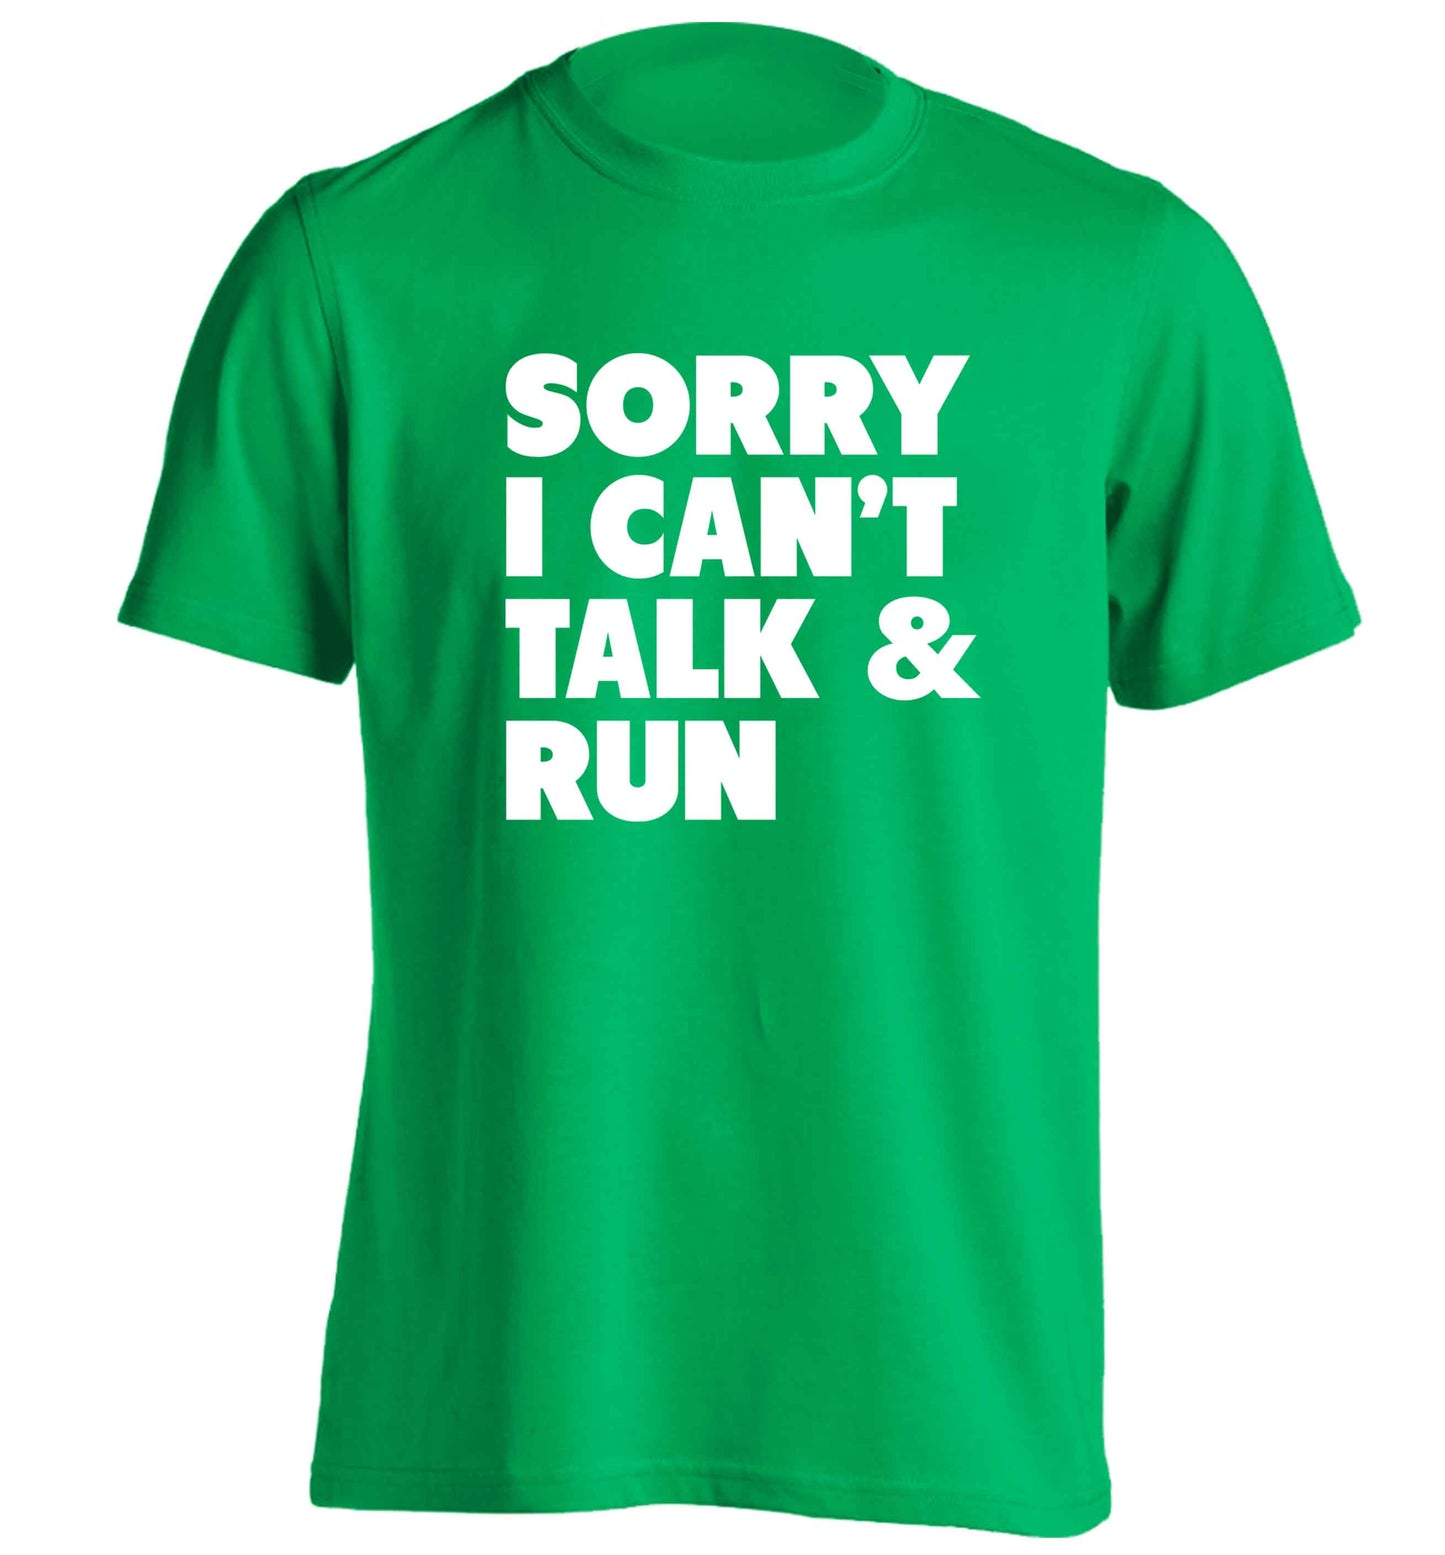 Sorry I can't talk and run adults unisex green Tshirt 2XL